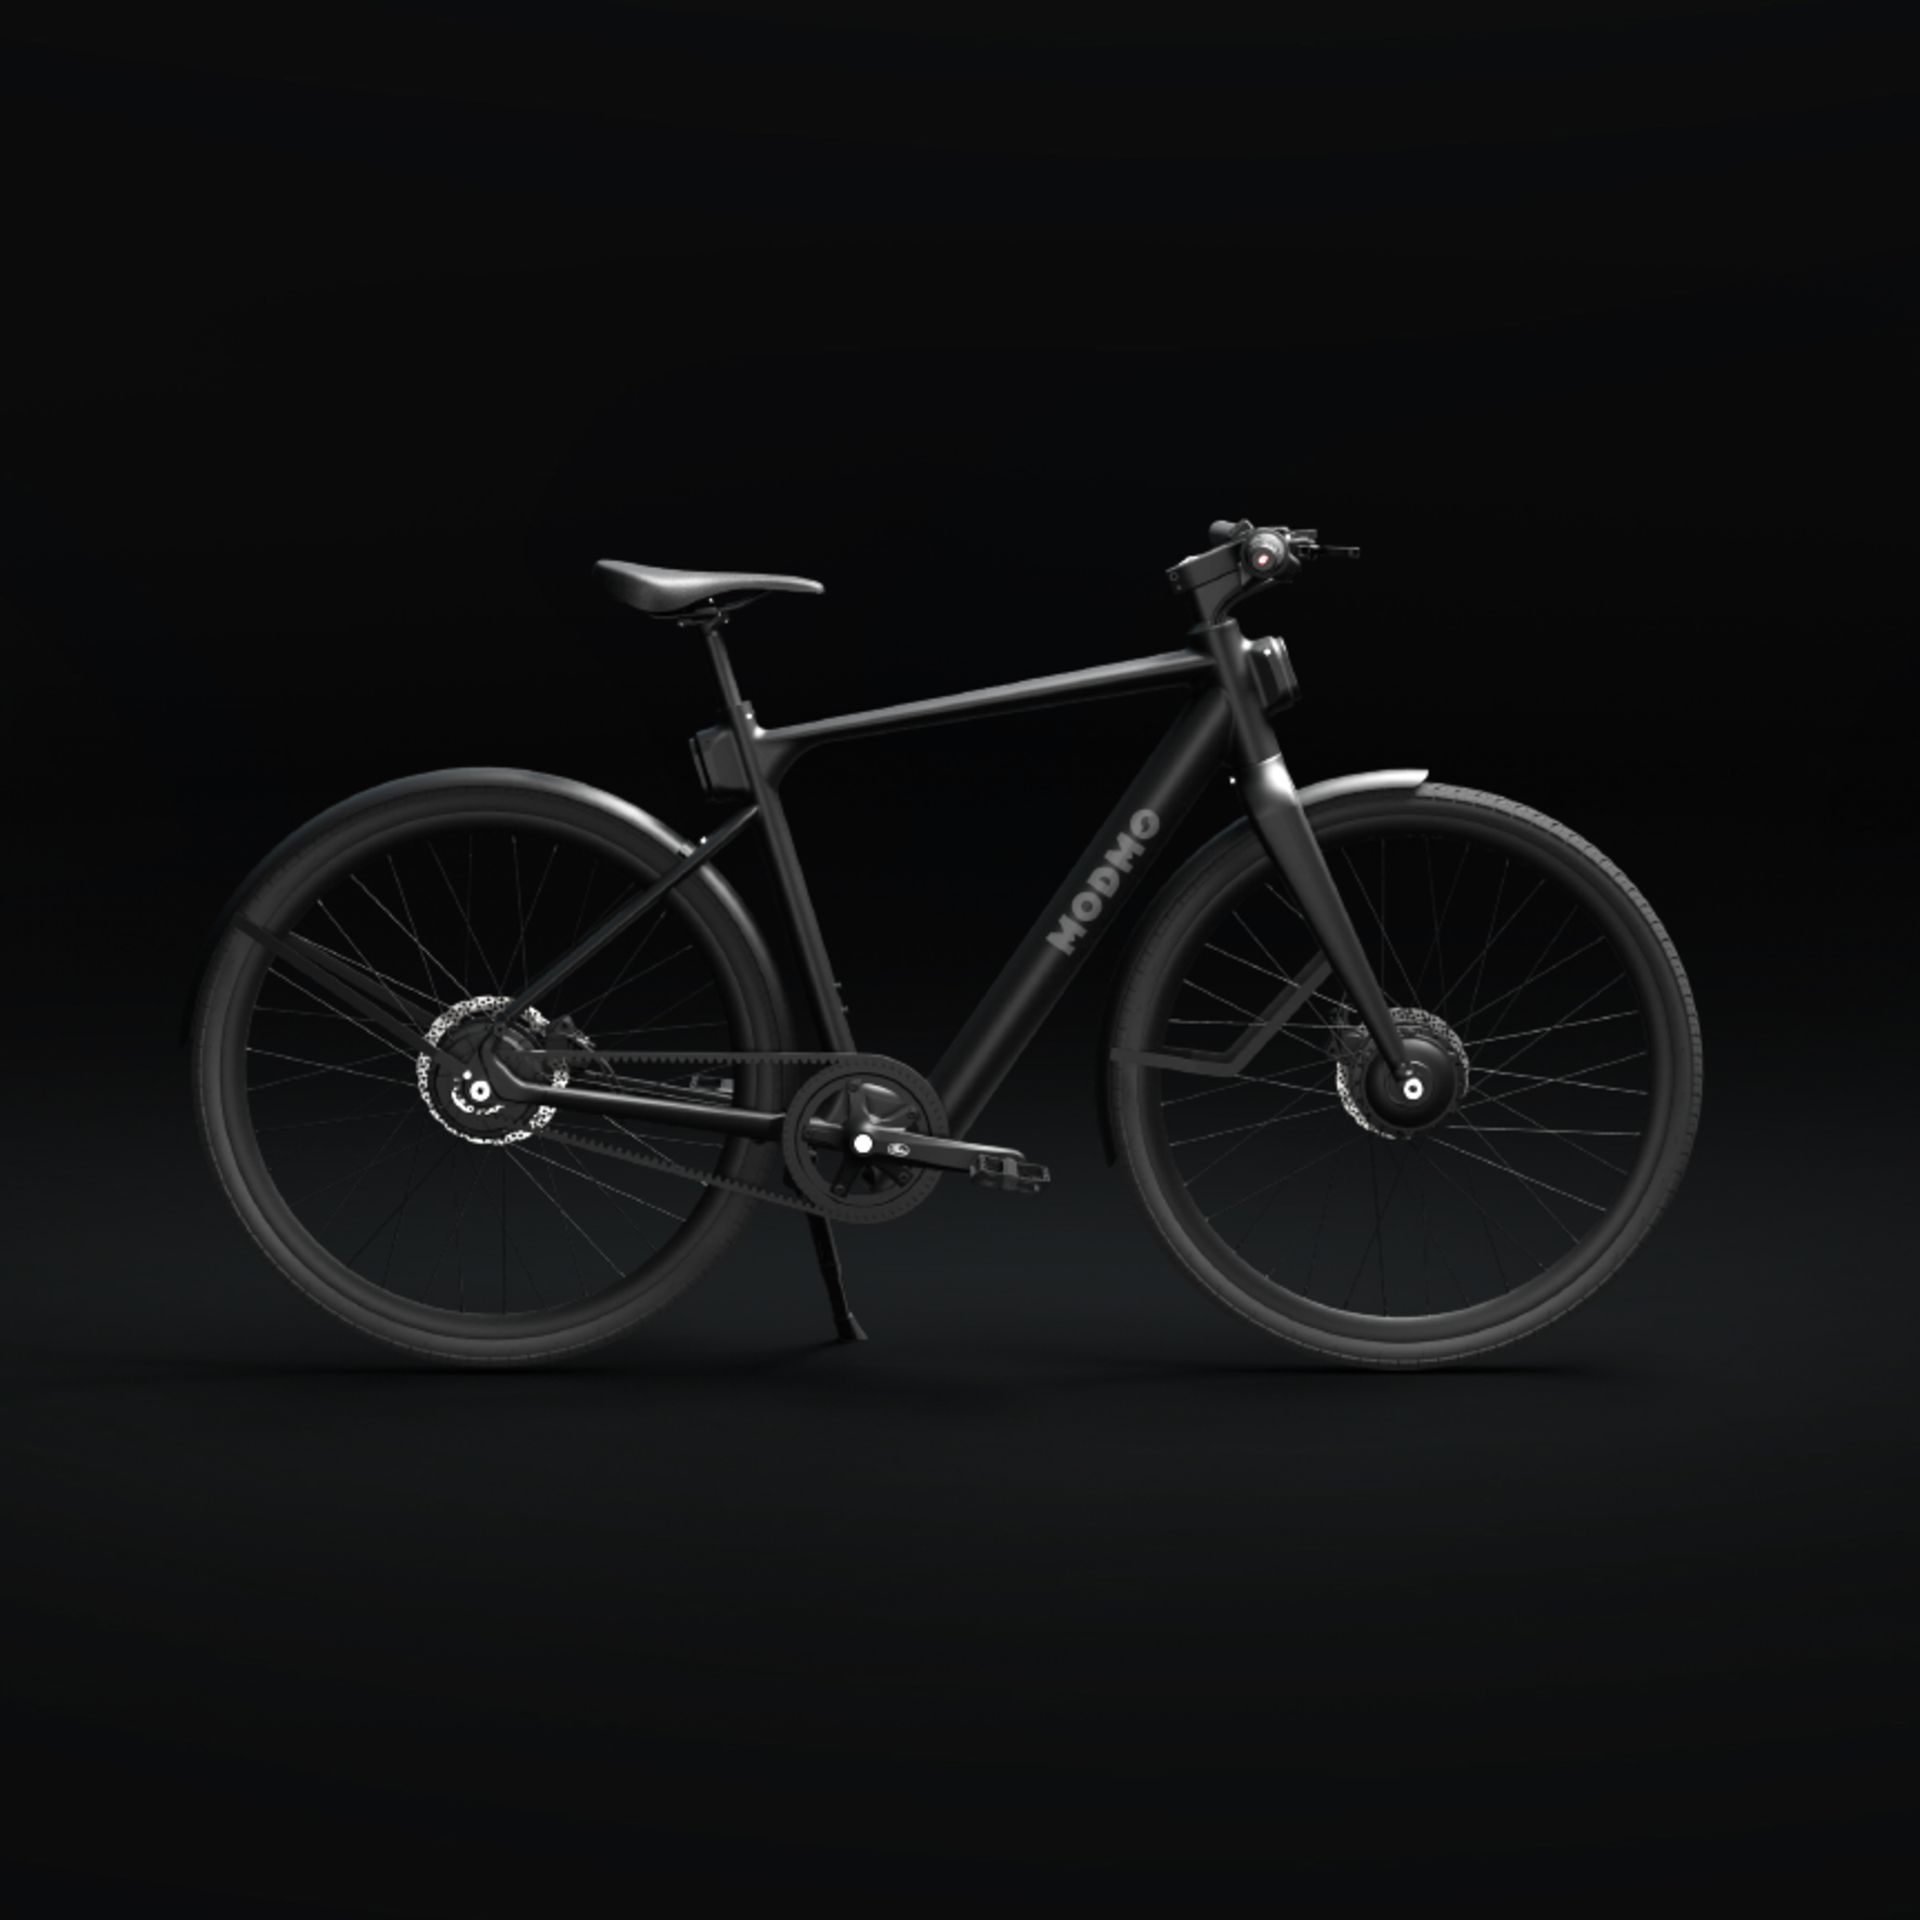 Modmo Saigon+ Electric Bicycle - RRP £2800 - Size M (Rider: 140-155cm) - Image 3 of 14